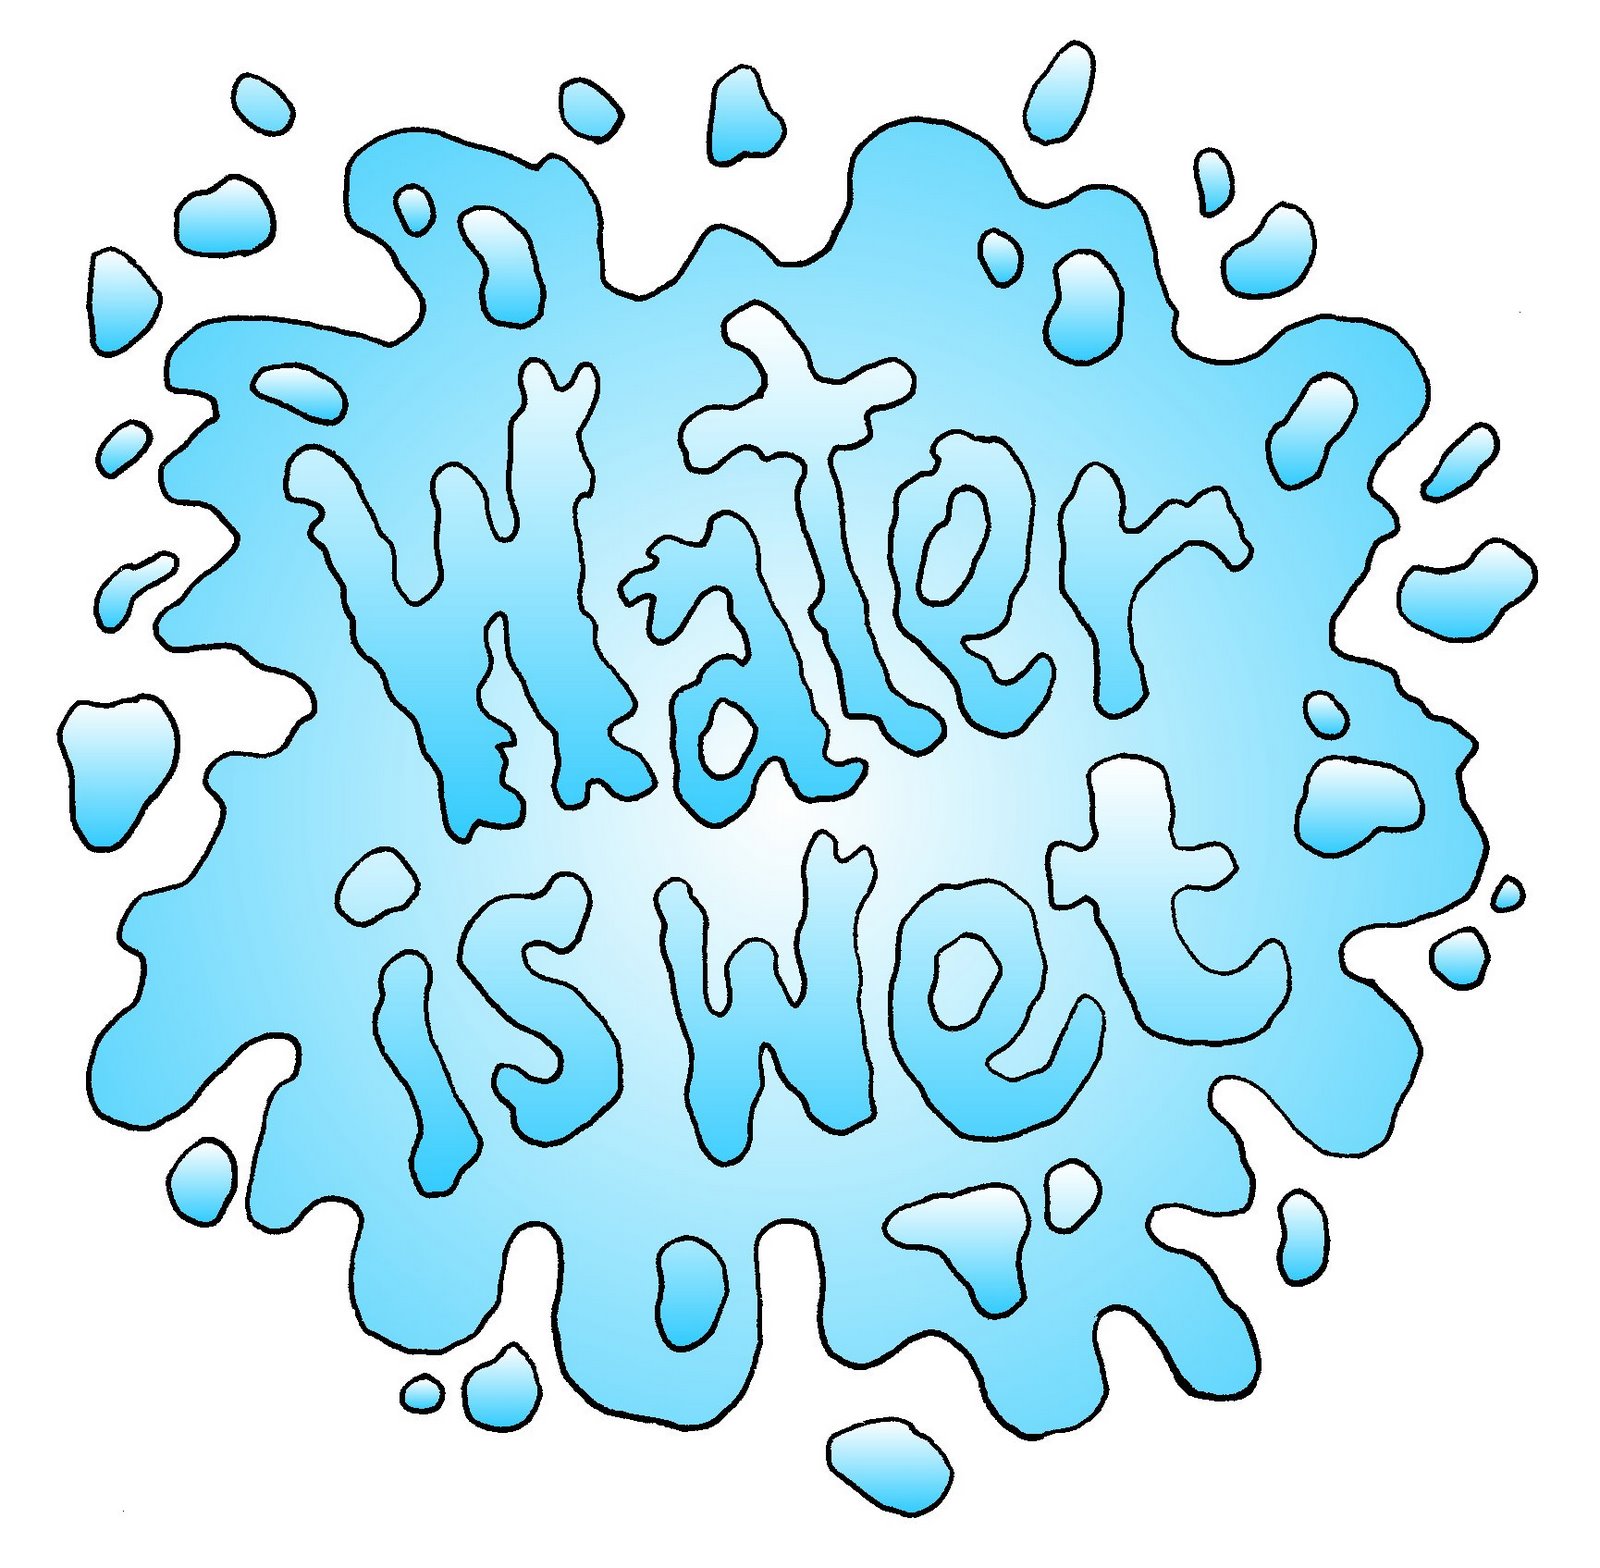 [Water+is+wet.jpg]